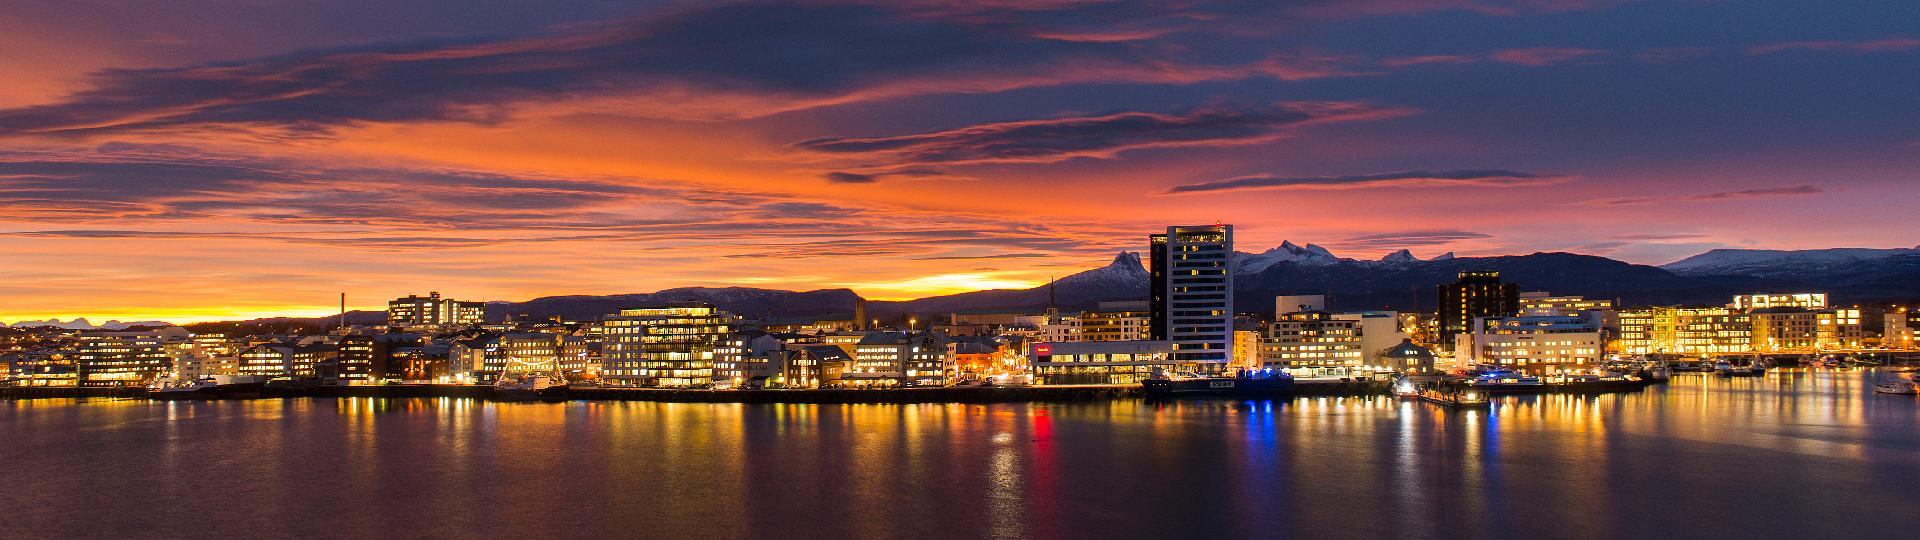 Bodø skyline